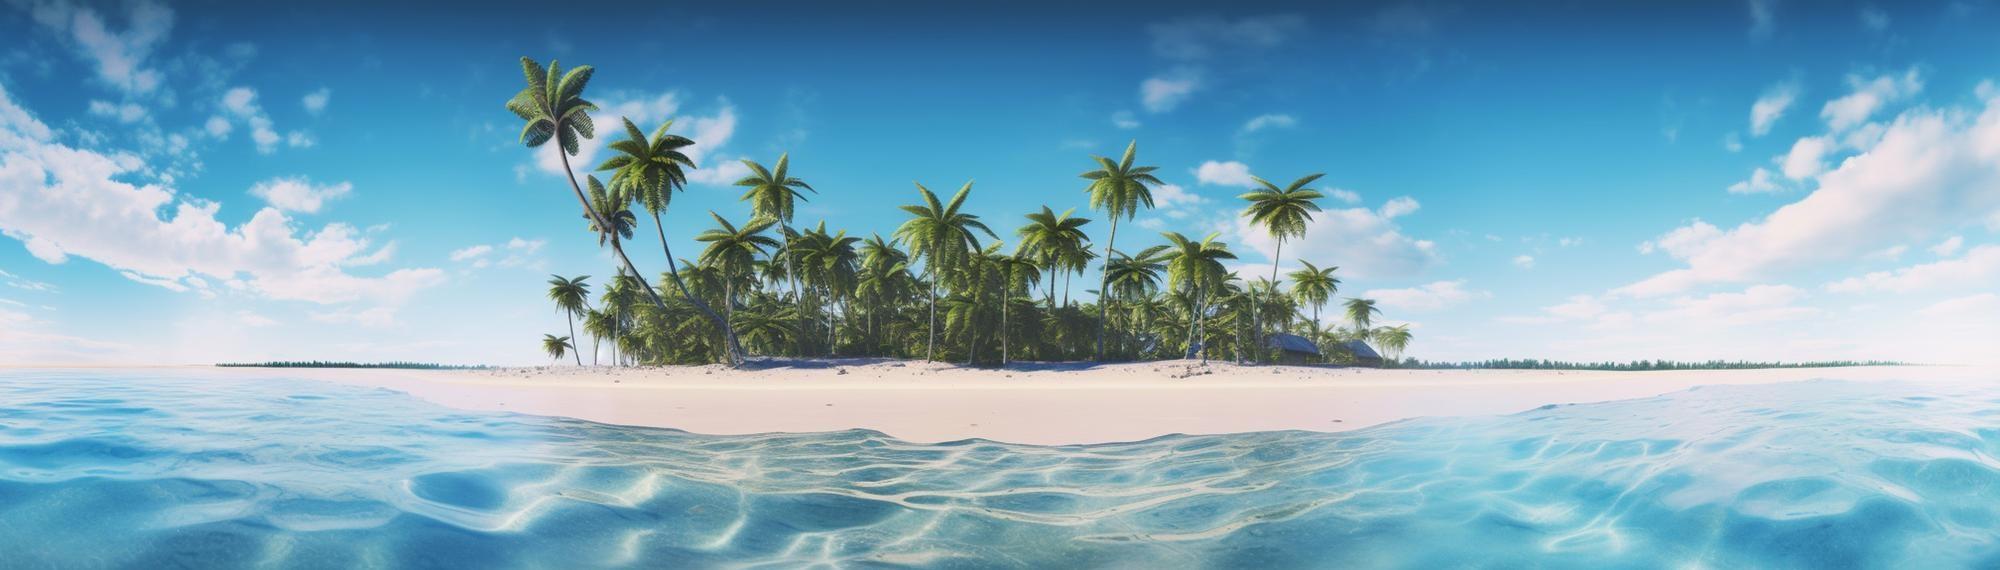 Premium Photo Beautiful Beach With Palms And Turquoise Sea Art